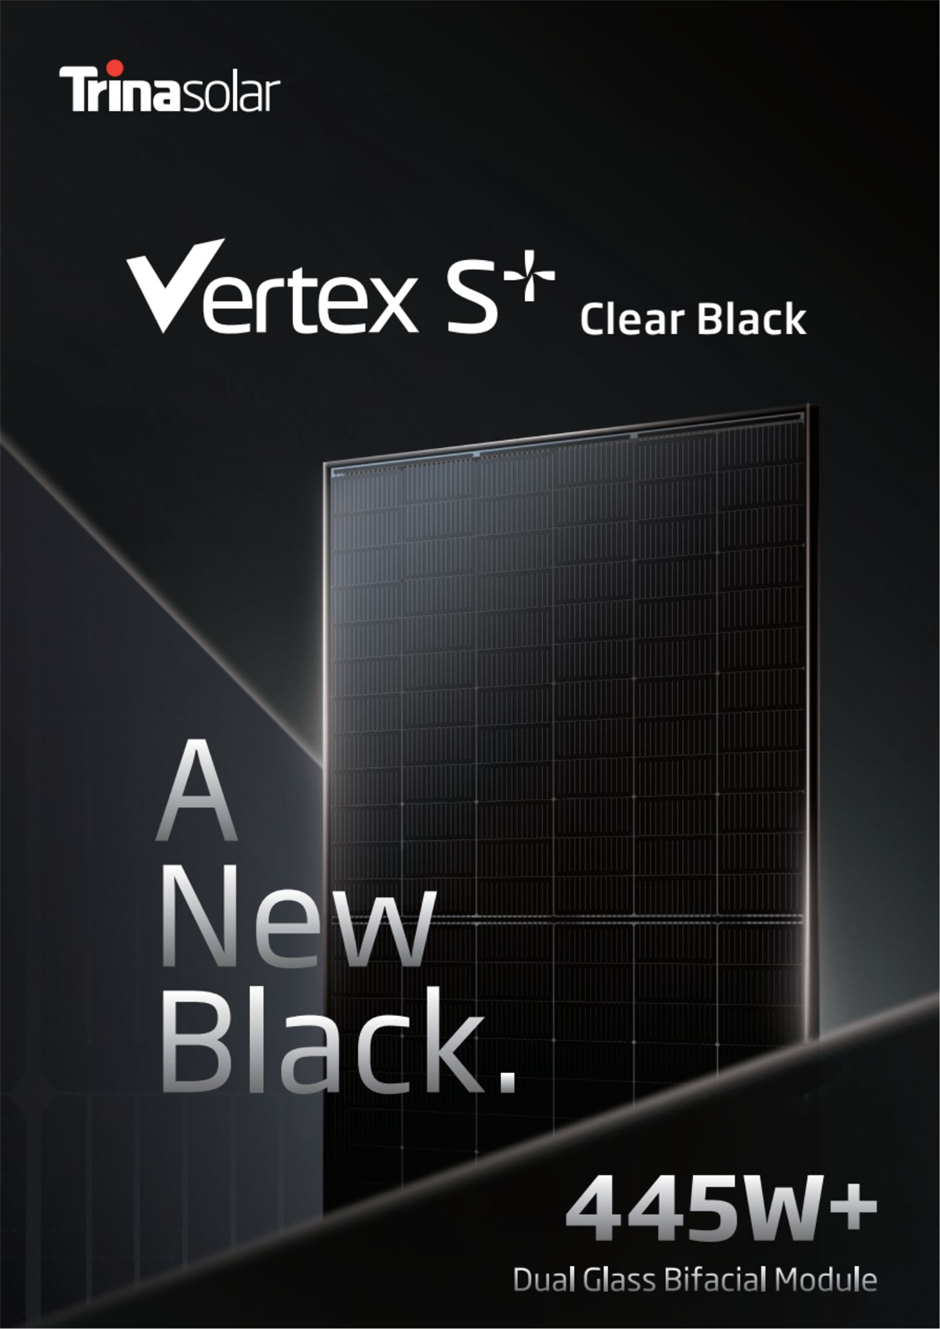 A New Black aesthetic with Trinasolar’s Vertex S+ Clear Black: 445W+ Dual-Glass Bifacial Solar Module